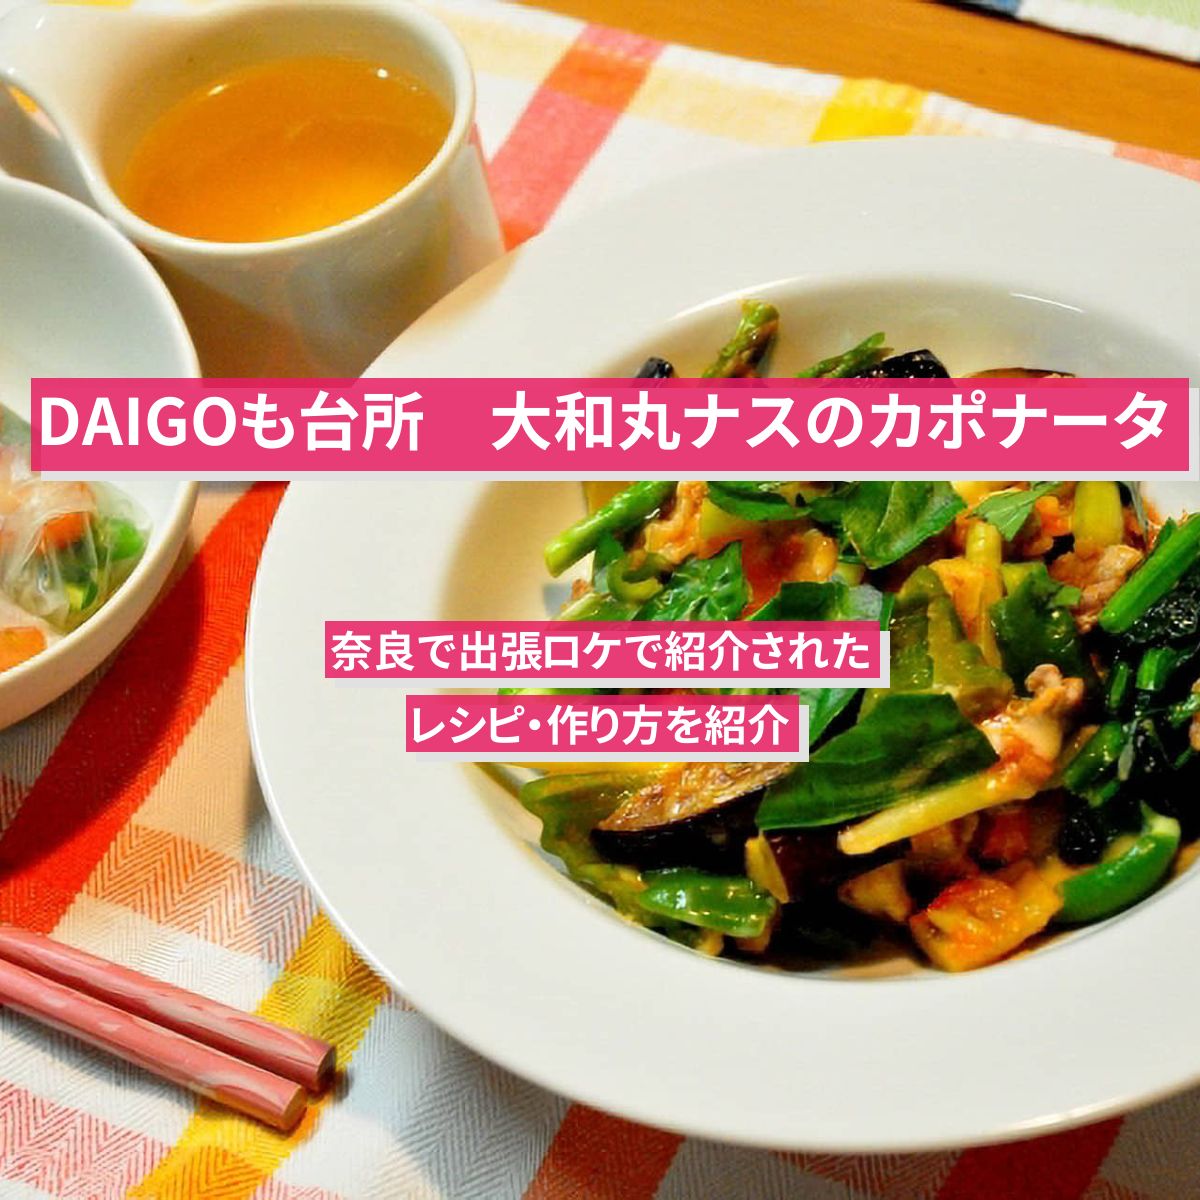 【DAIGOも台所】『大和丸ナスのカポナータ』のレシピ・作り方を紹介